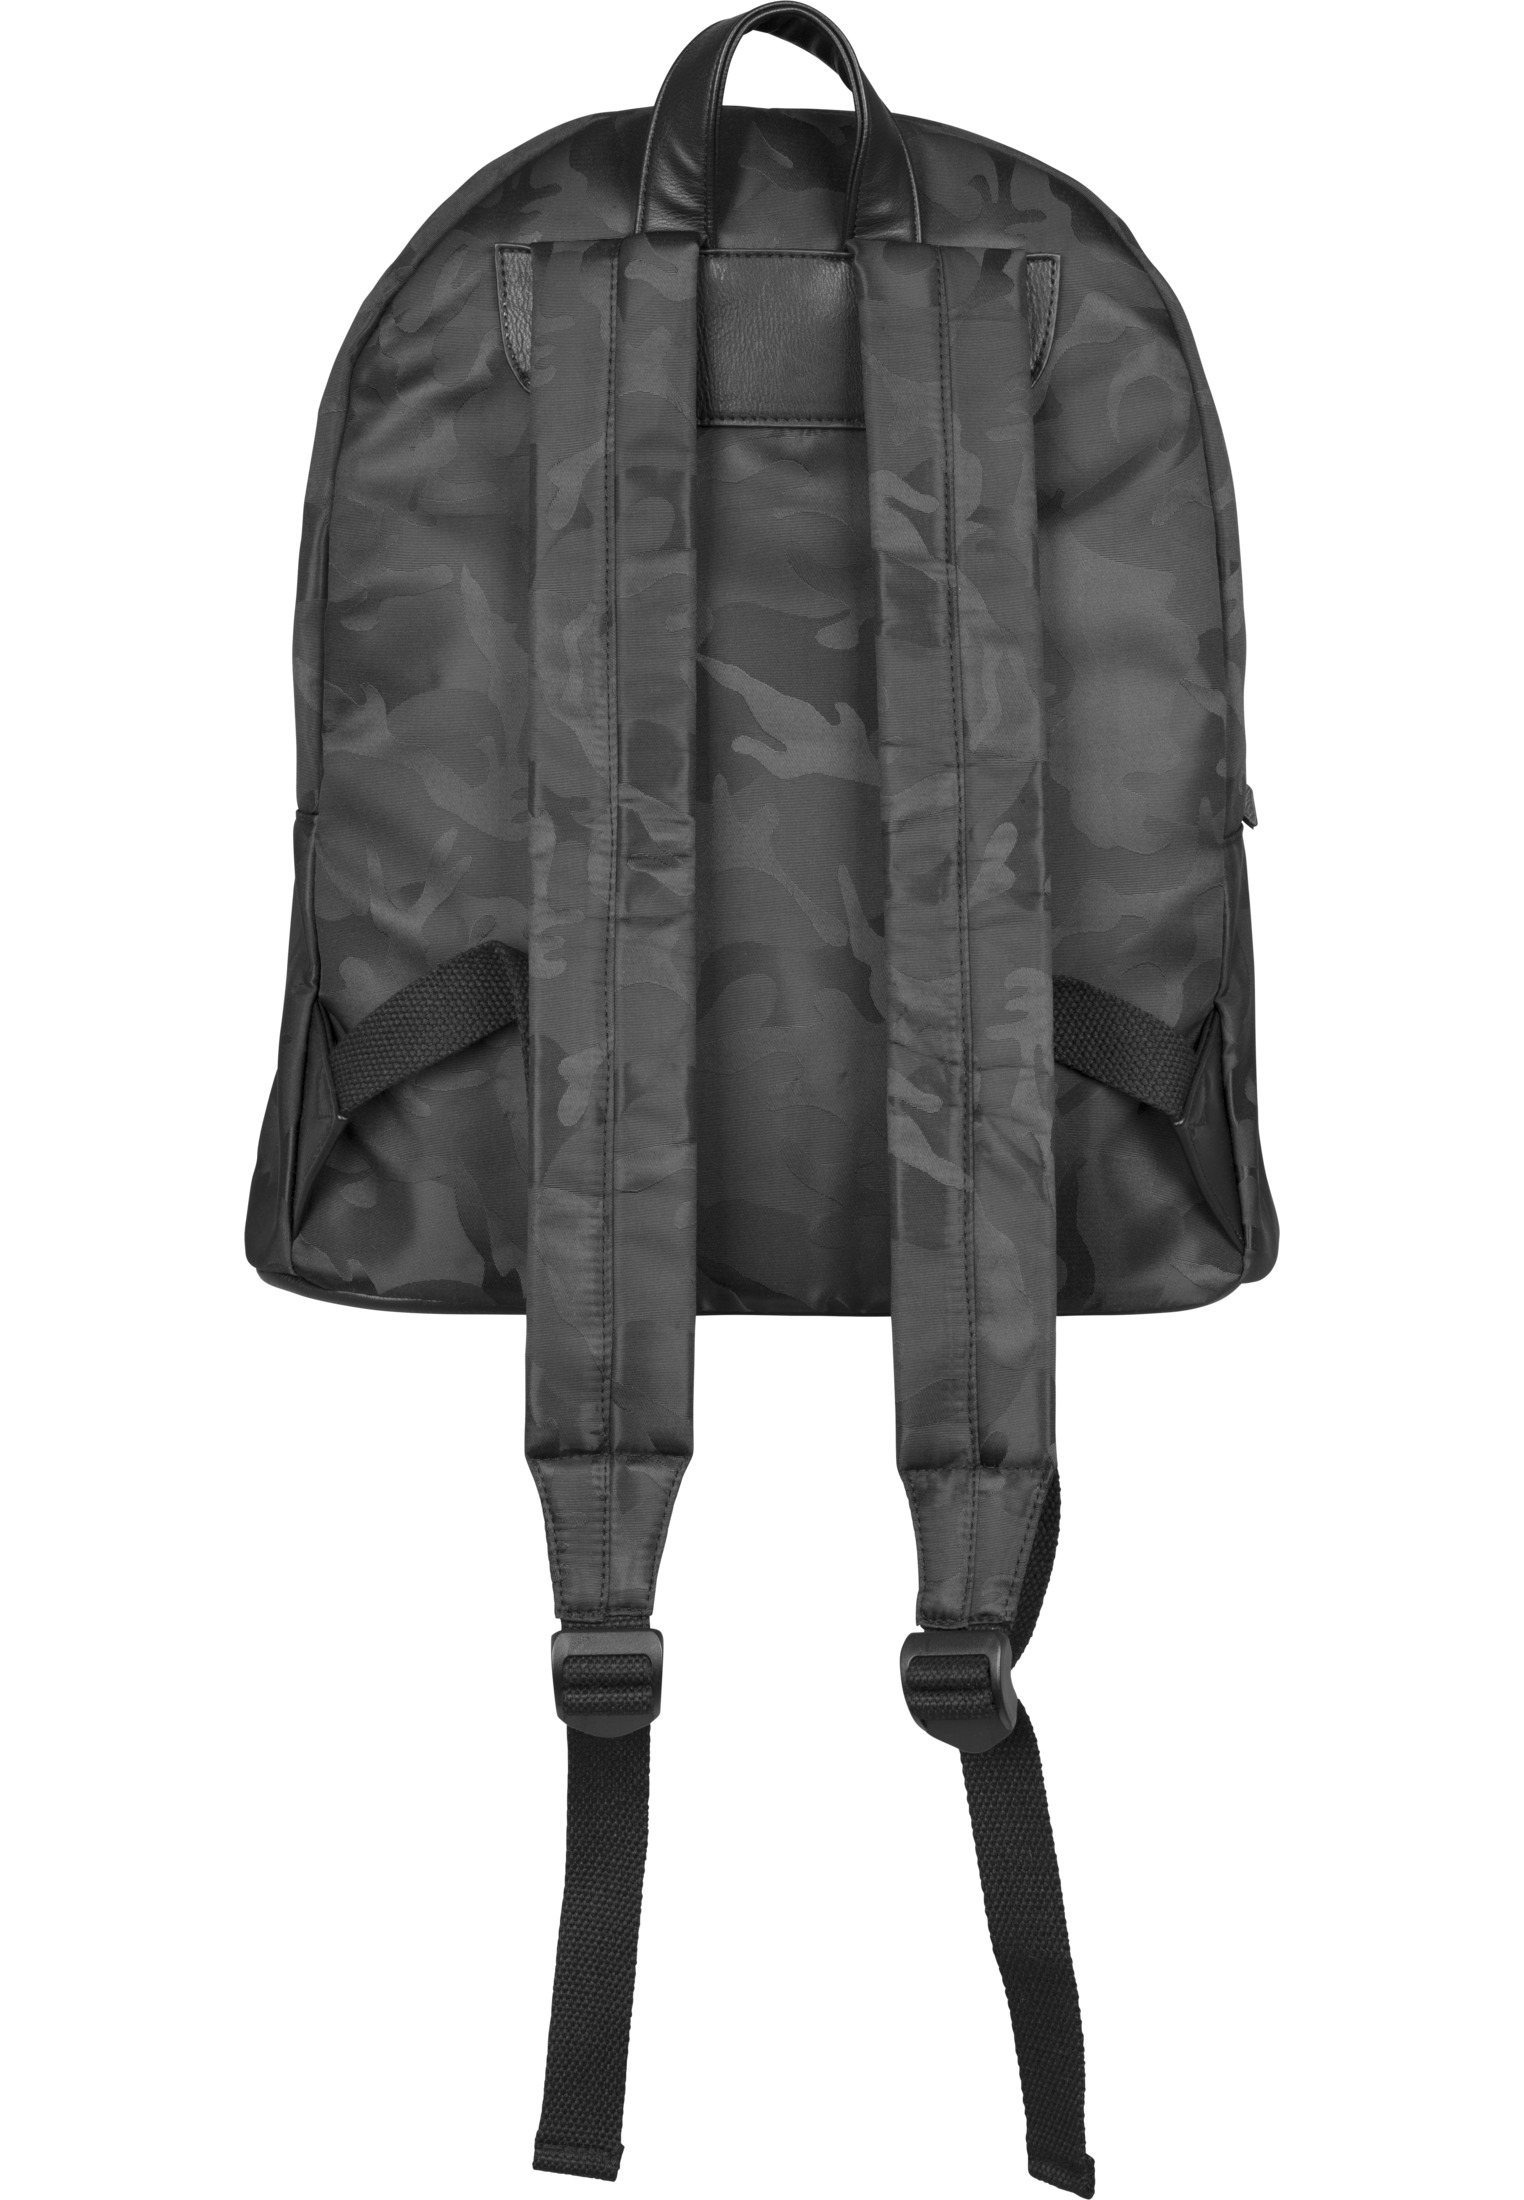 Taschen Camo Jacquard Backpack in Farbe black camo